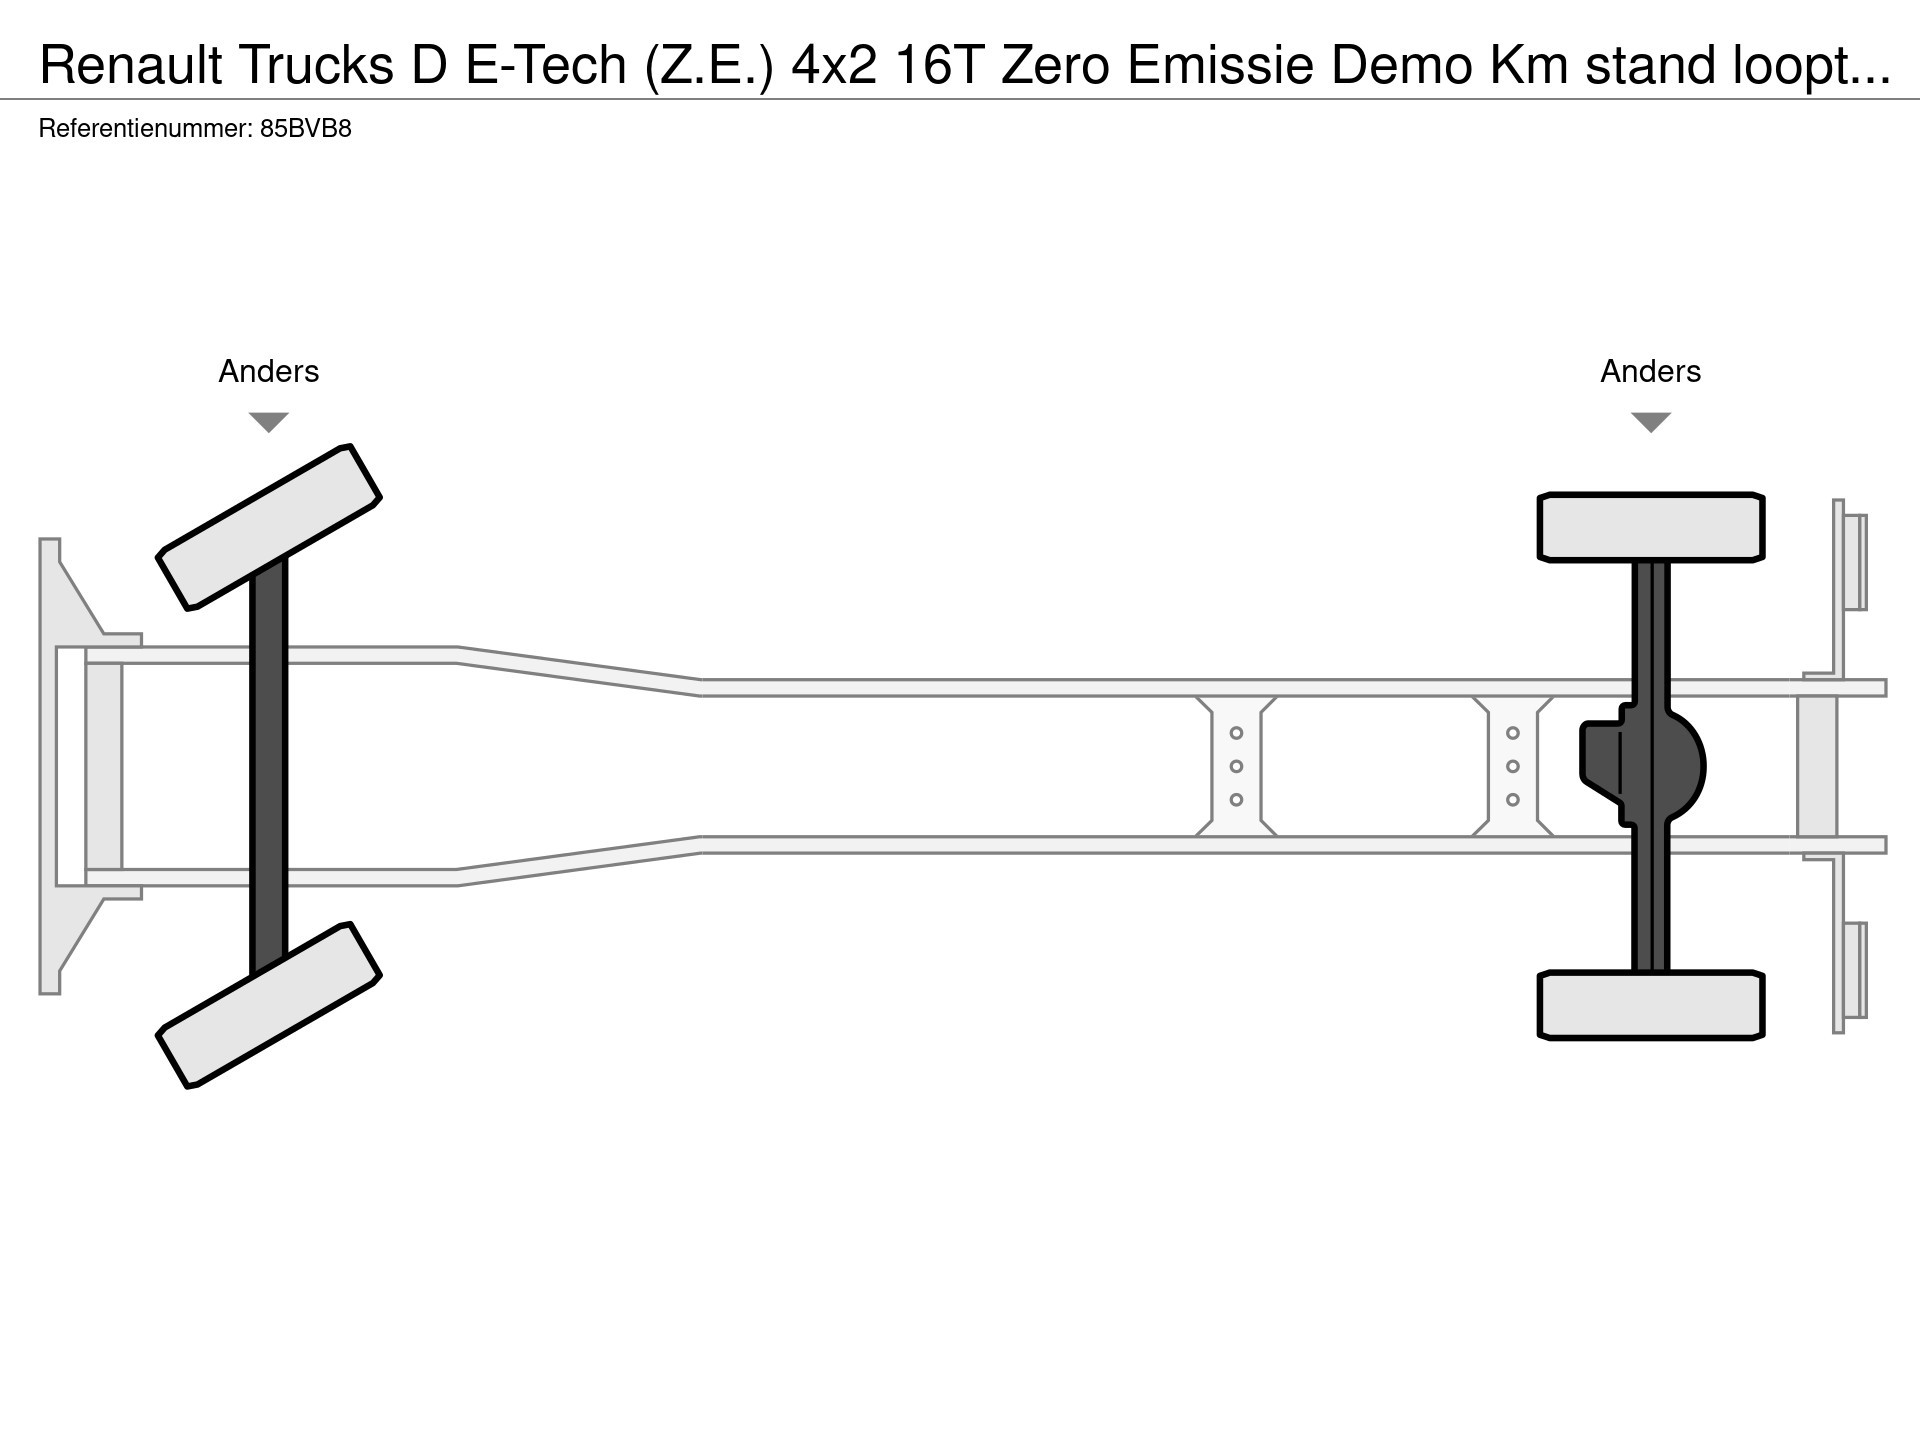 Renault Trucks D E-Tech (Z.E.) 4x2 16T Zero Emissie Demo Km stand loopt op.